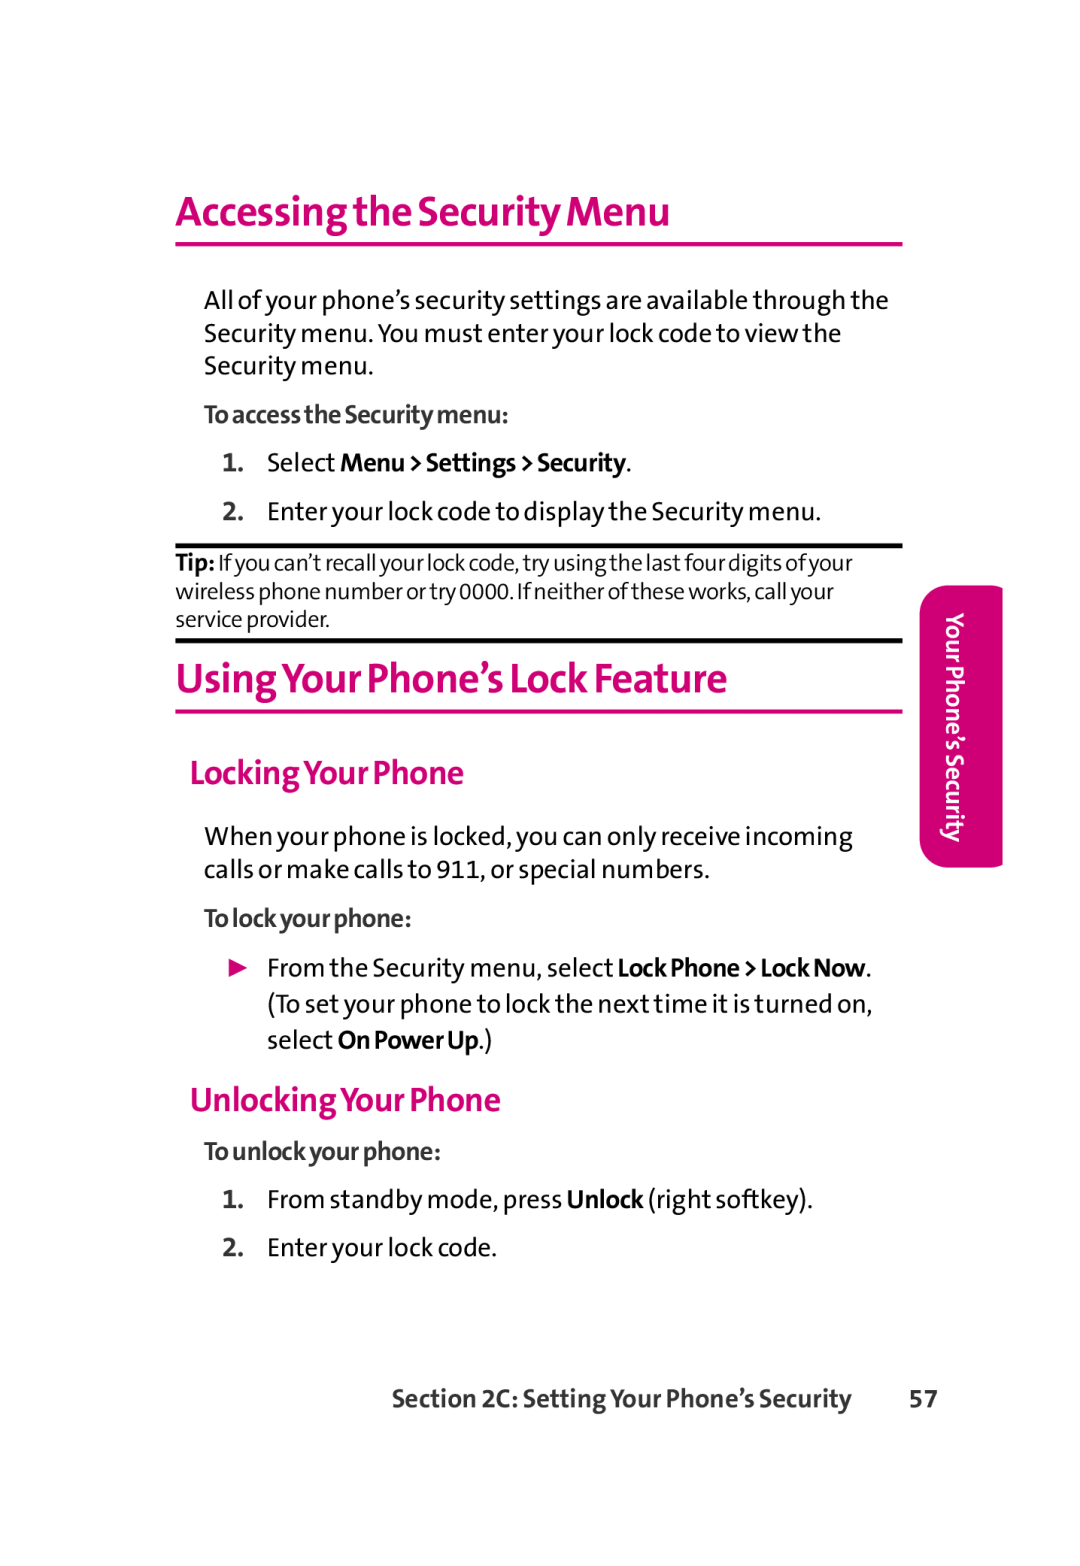 LG Electronics 350 Accessing the Security Menu, UsingYour Phone’s Lock Feature, LockingYour Phone, UnlockingYour Phone 